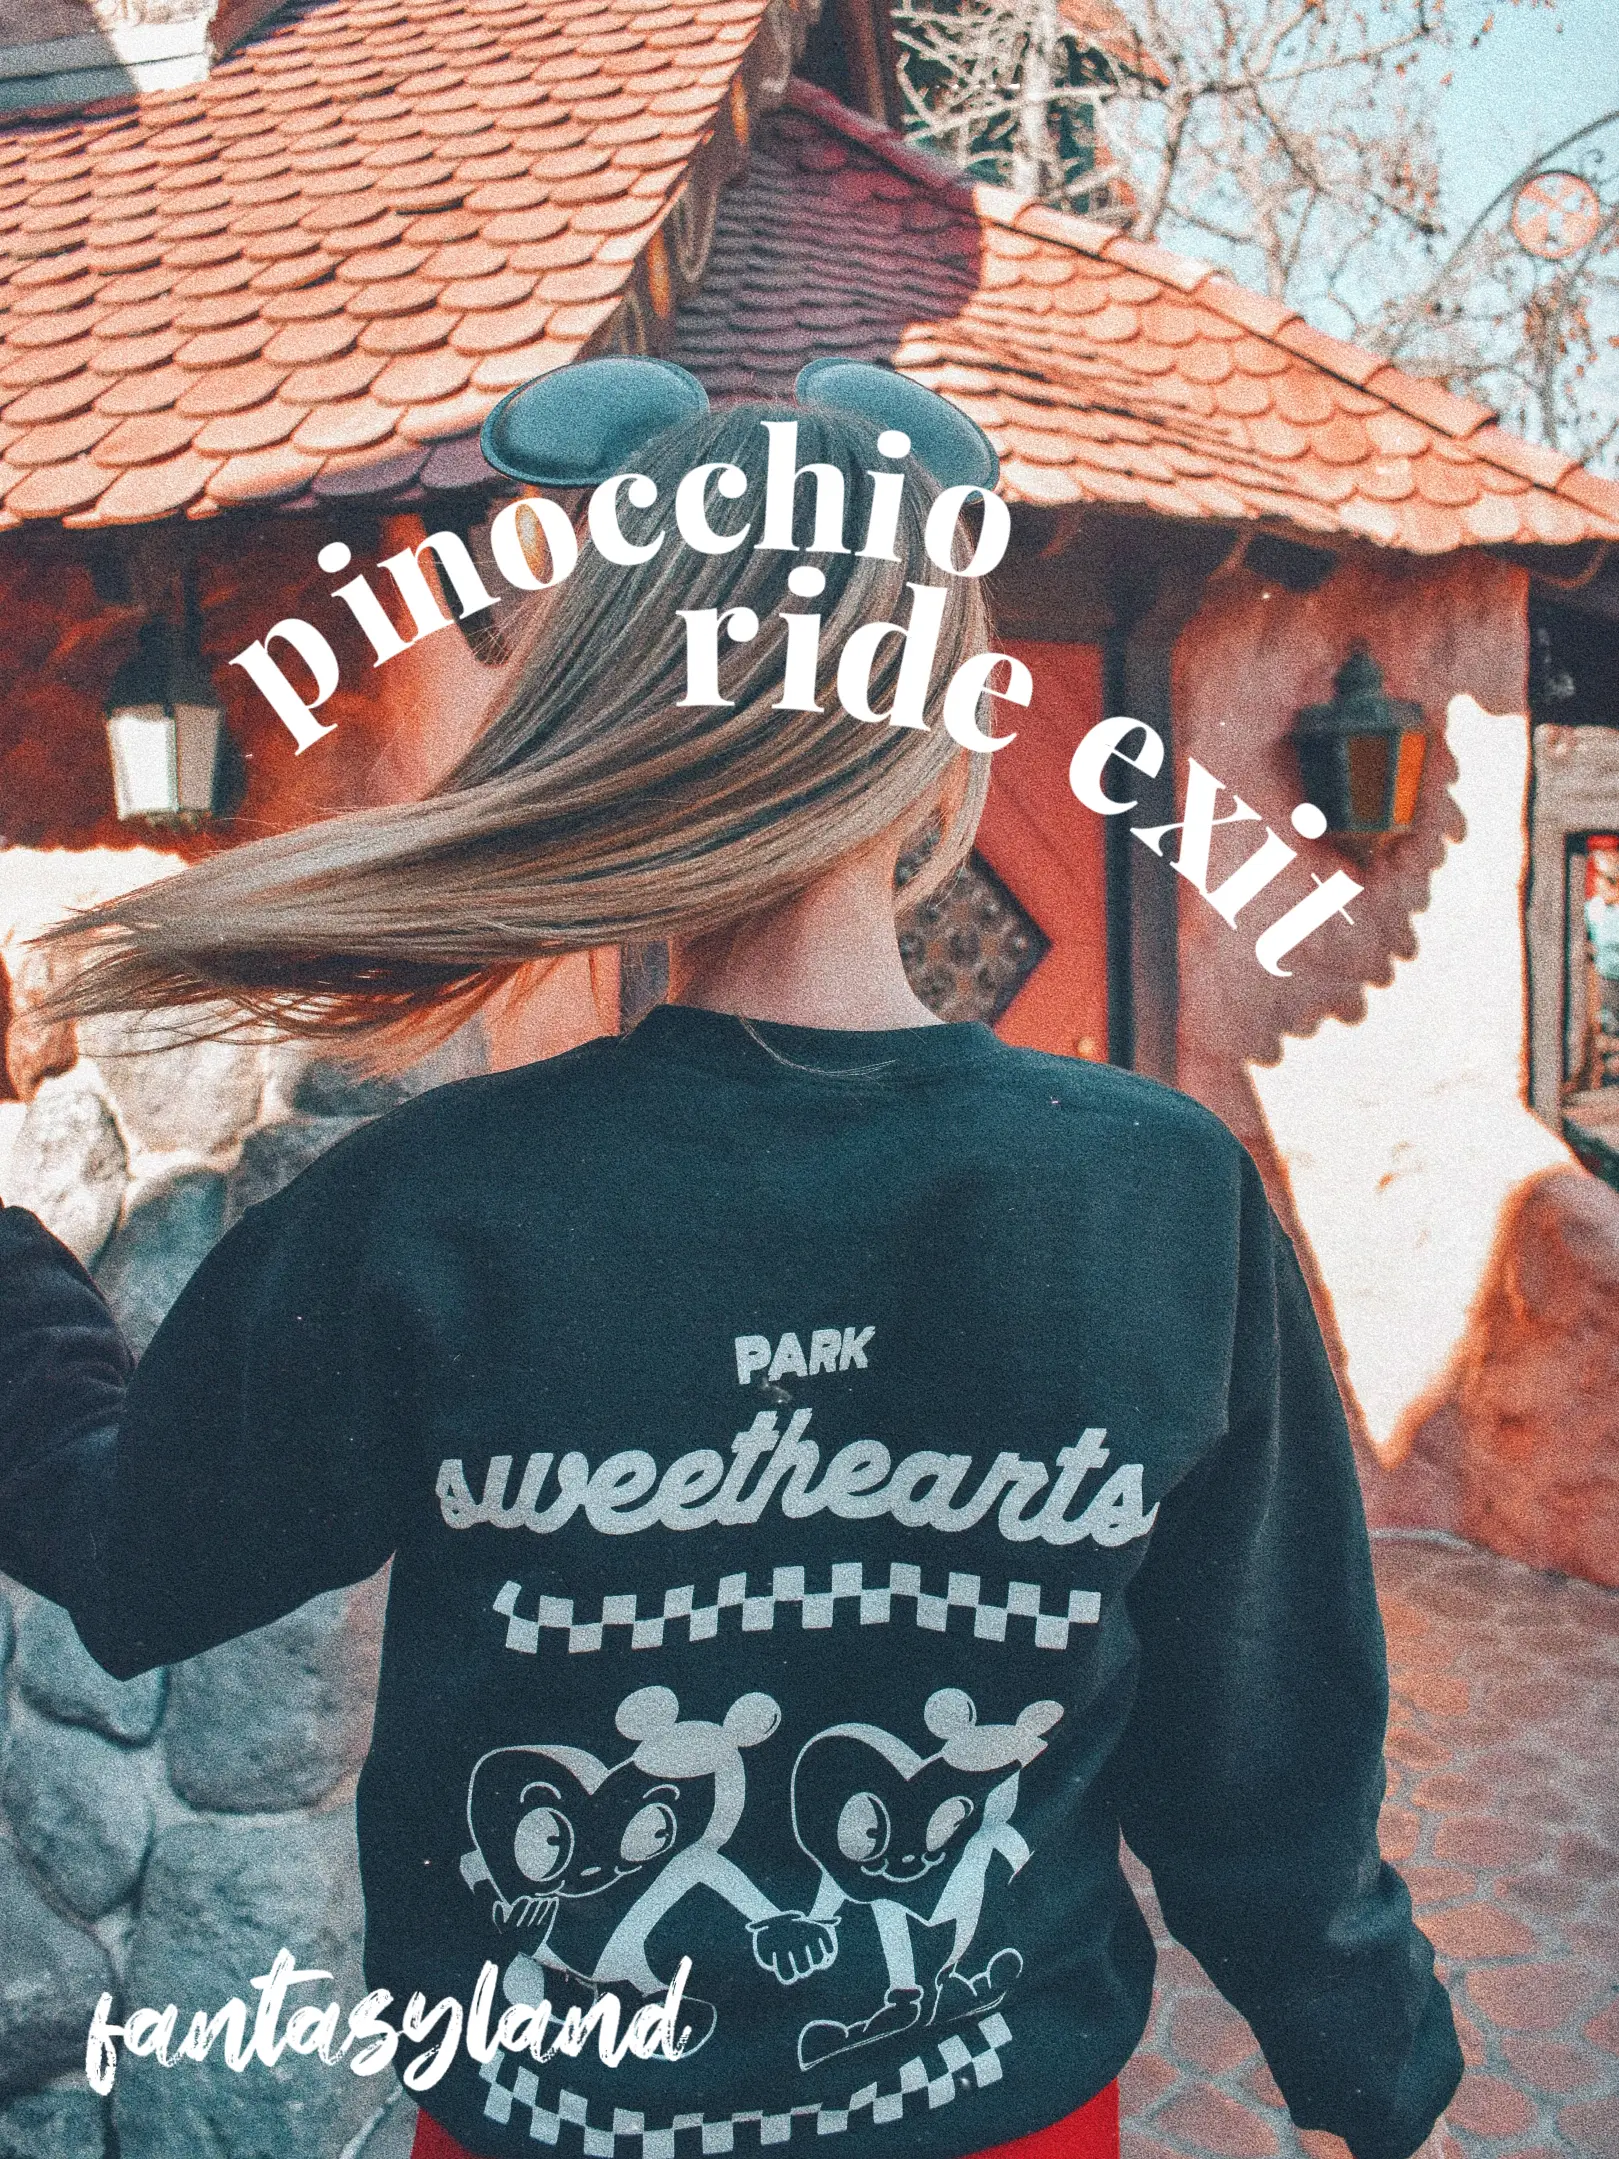  A man wearing a pinocchio ride fantasyland sweatshirt.